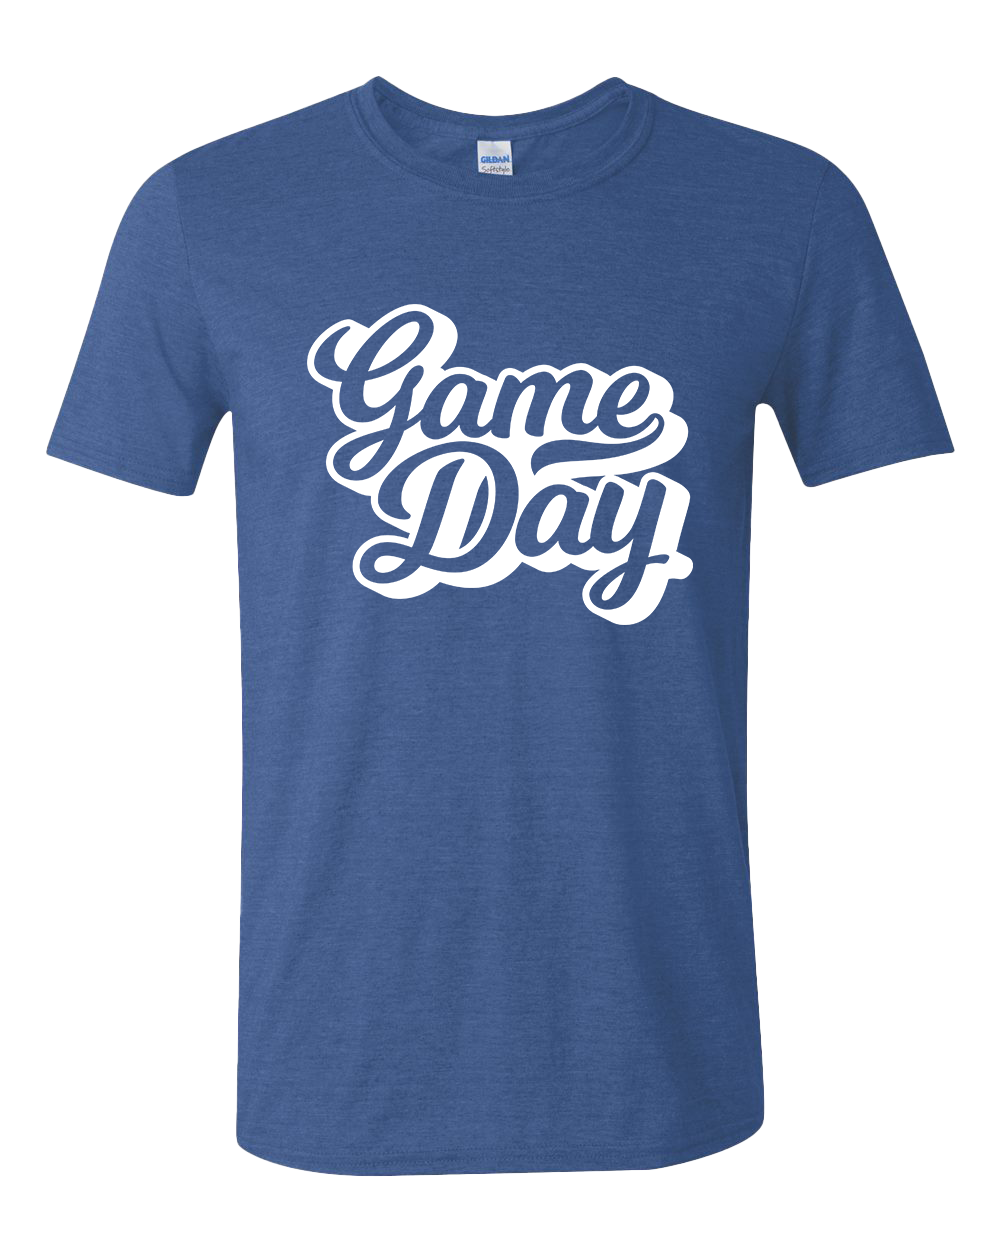 Game Day Tshirt - Royal Heather